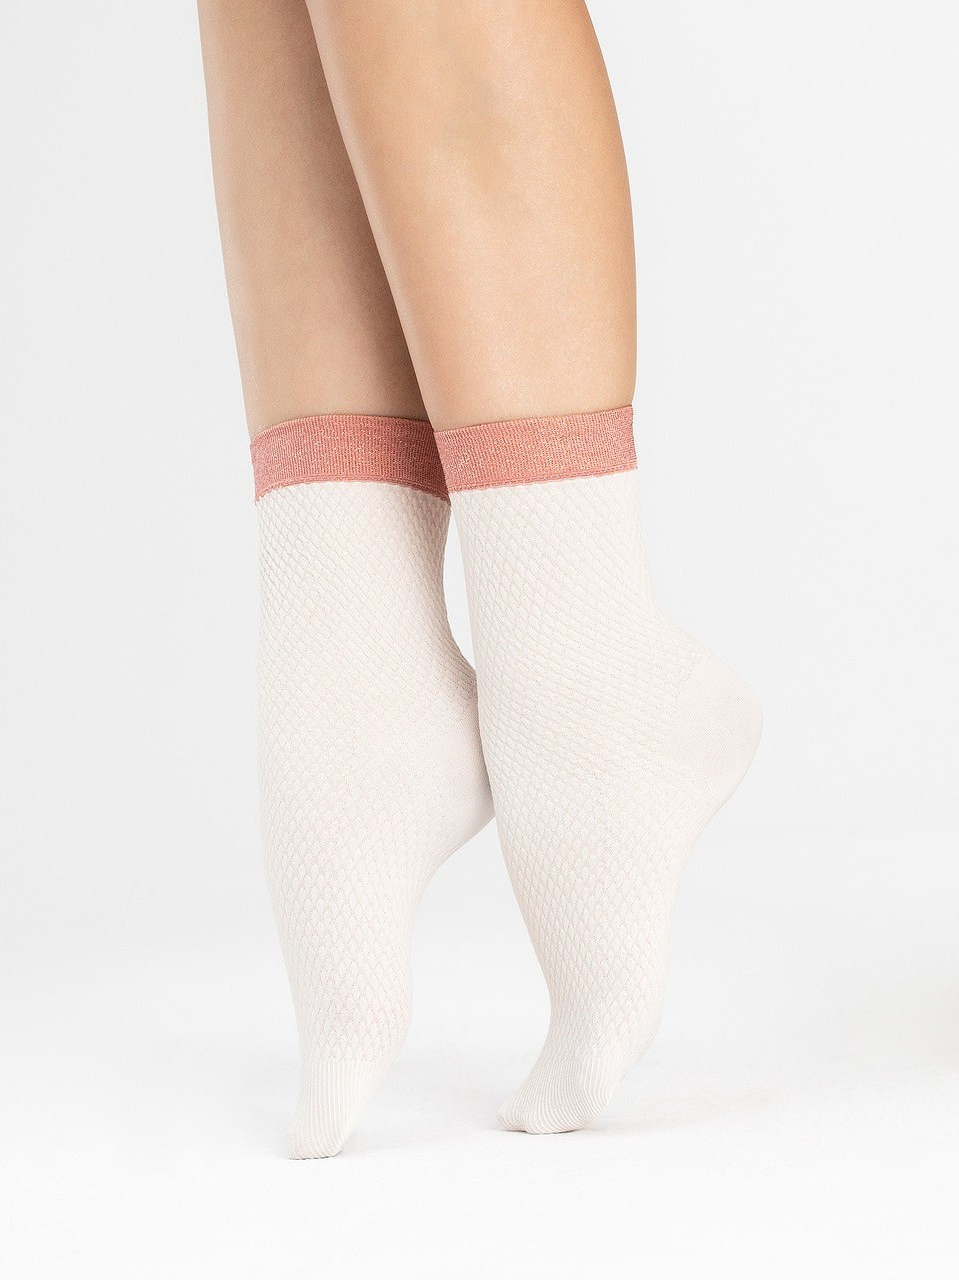 Ponožky Fiore G1137 Biscuit 60 den ecri-pink Univerzální